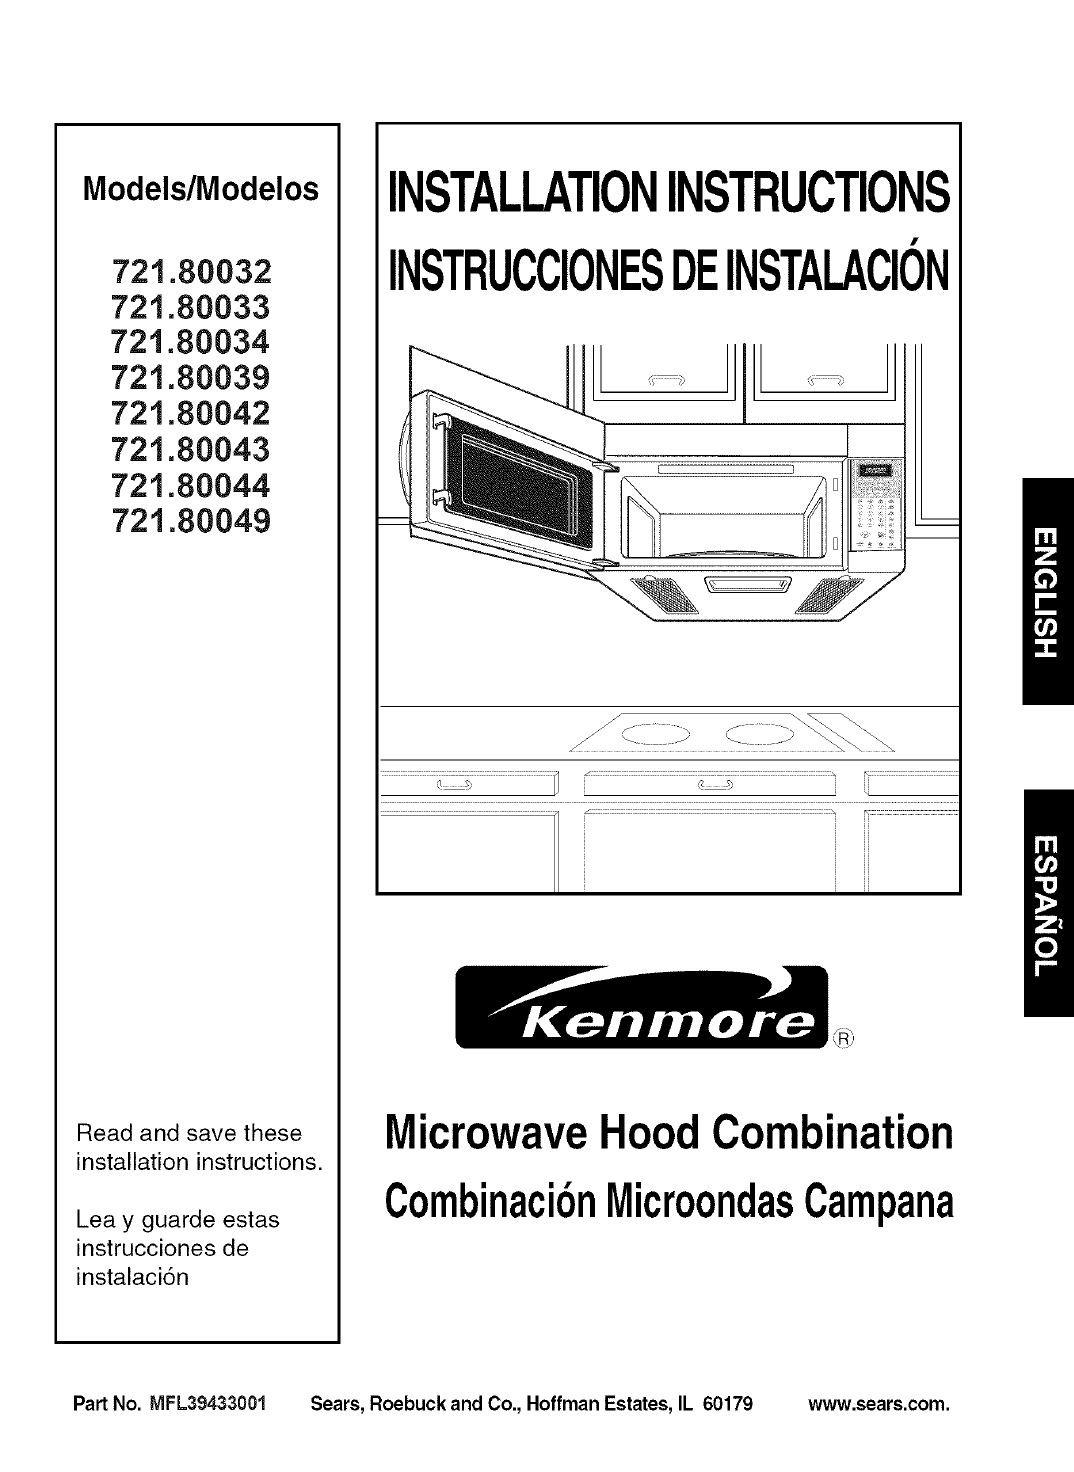 kenmore microwave manual 721